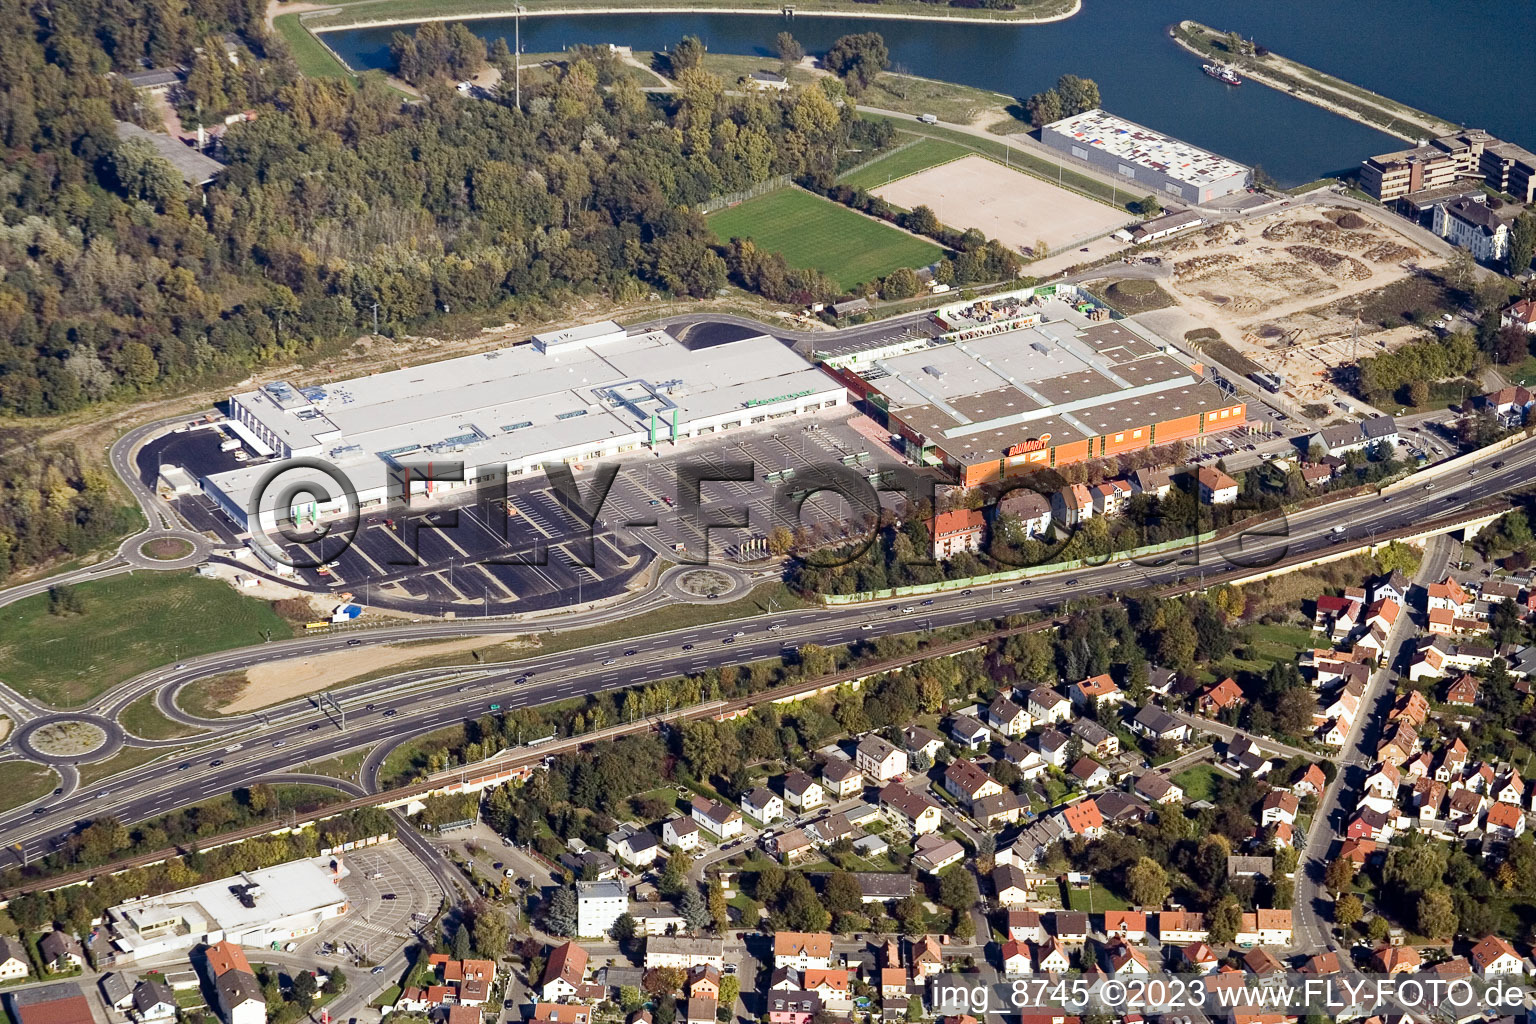 Aerial view of Maximiliancenter retail park in Wörth-Maximiliansau in the district Maximiliansau in Wörth am Rhein in the state Rhineland-Palatinate, Germany